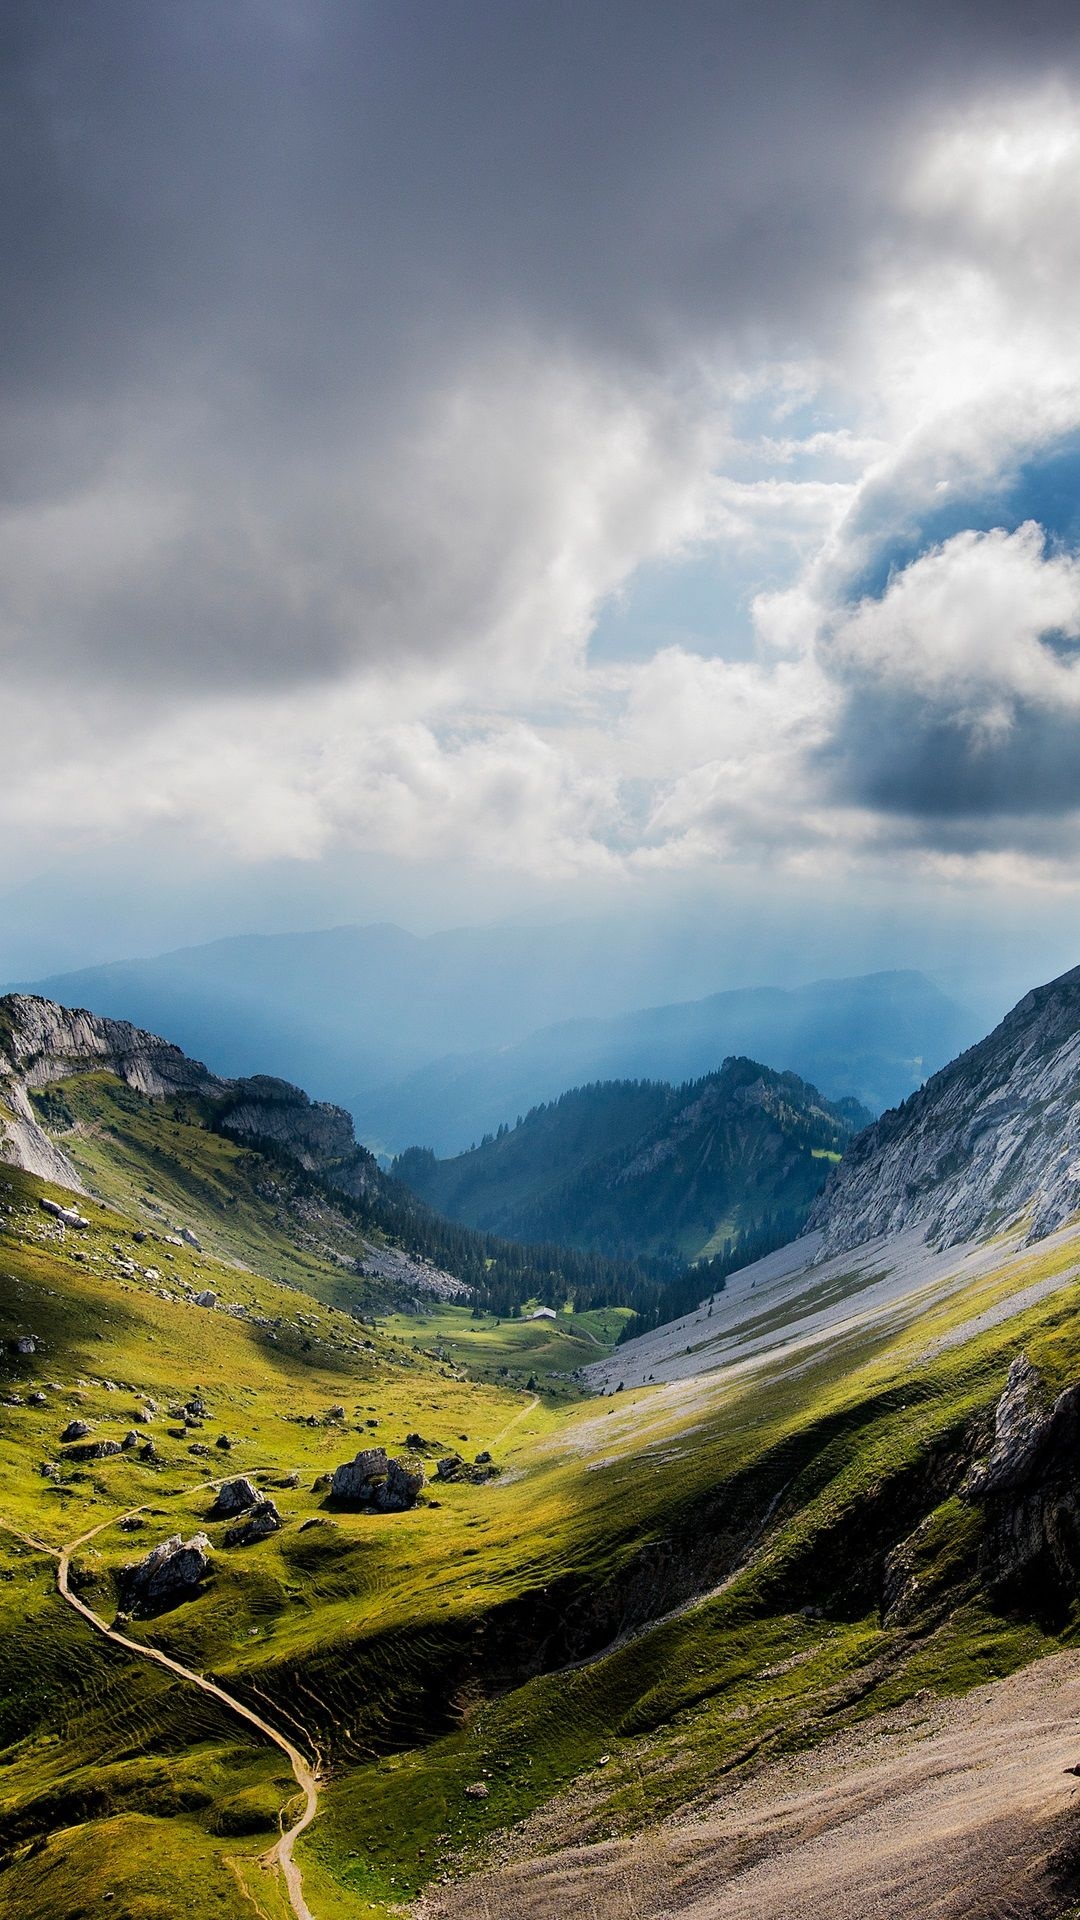 Mount Pilatus Switzerland, Clouds iPhone wallpaper, Wallpaper iPhone 6 Plus, Travels expert, 1080x1920 Full HD Handy